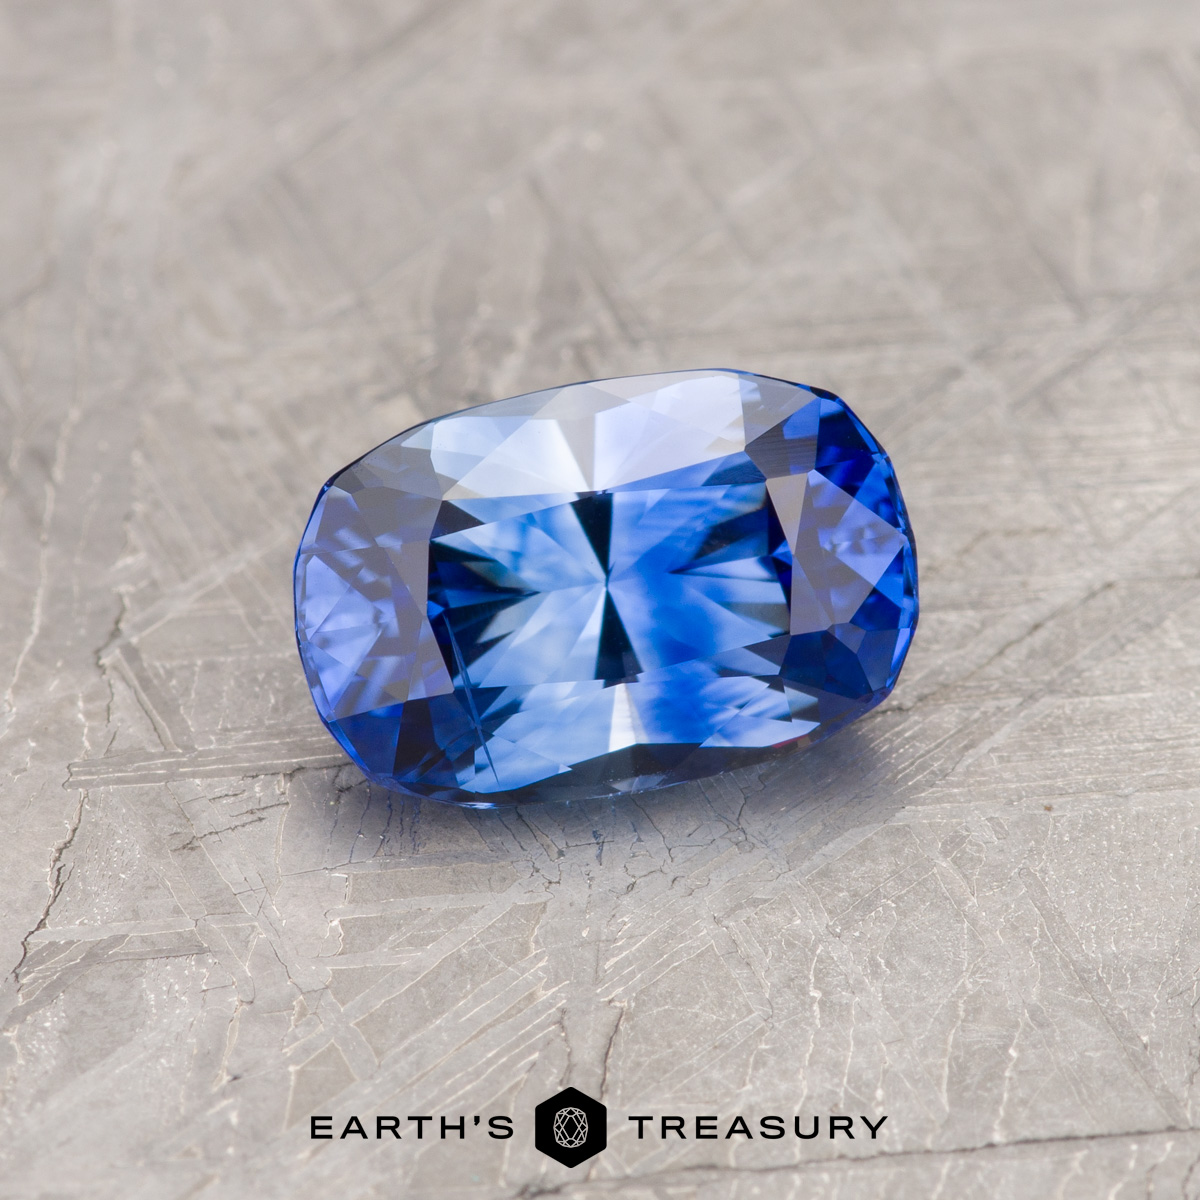 A blue ceylon sapphire in a classic oval design